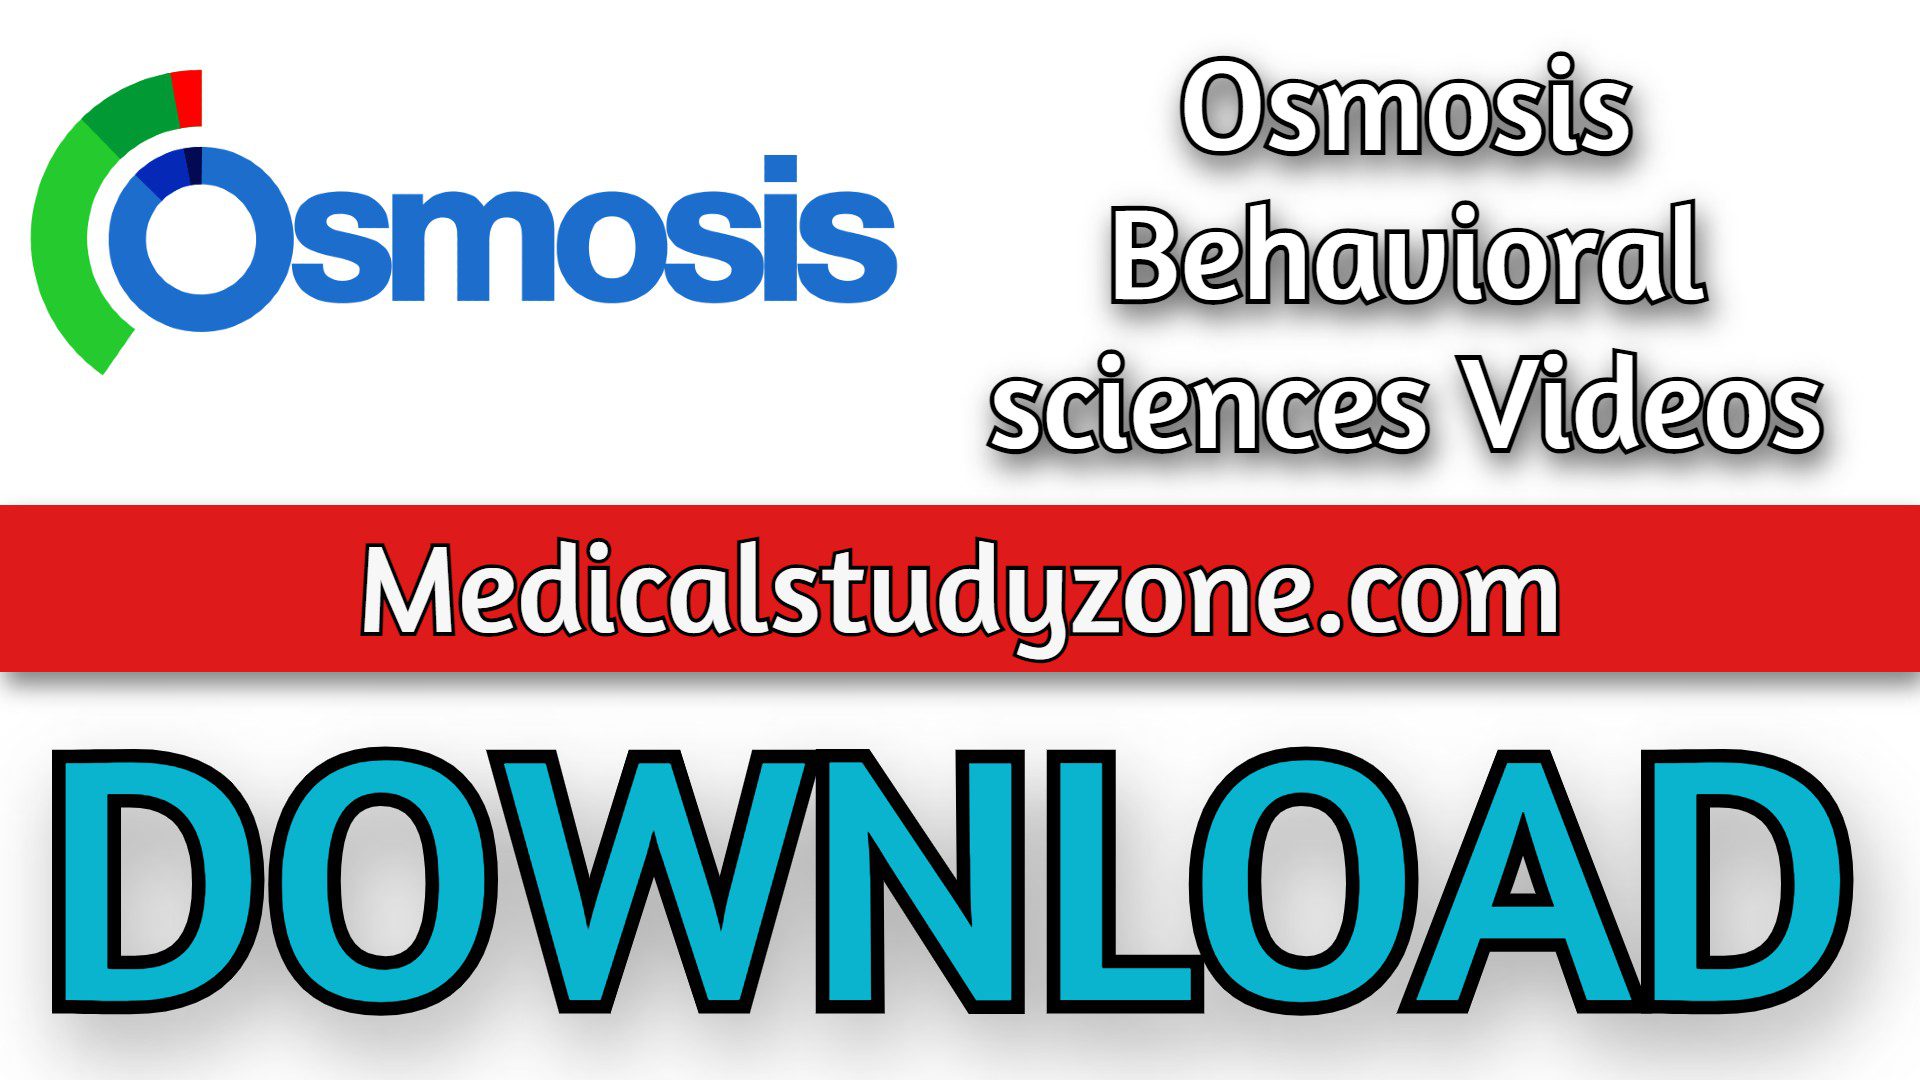 Osmosis Behavioral sciences Videos 2022 Free Download